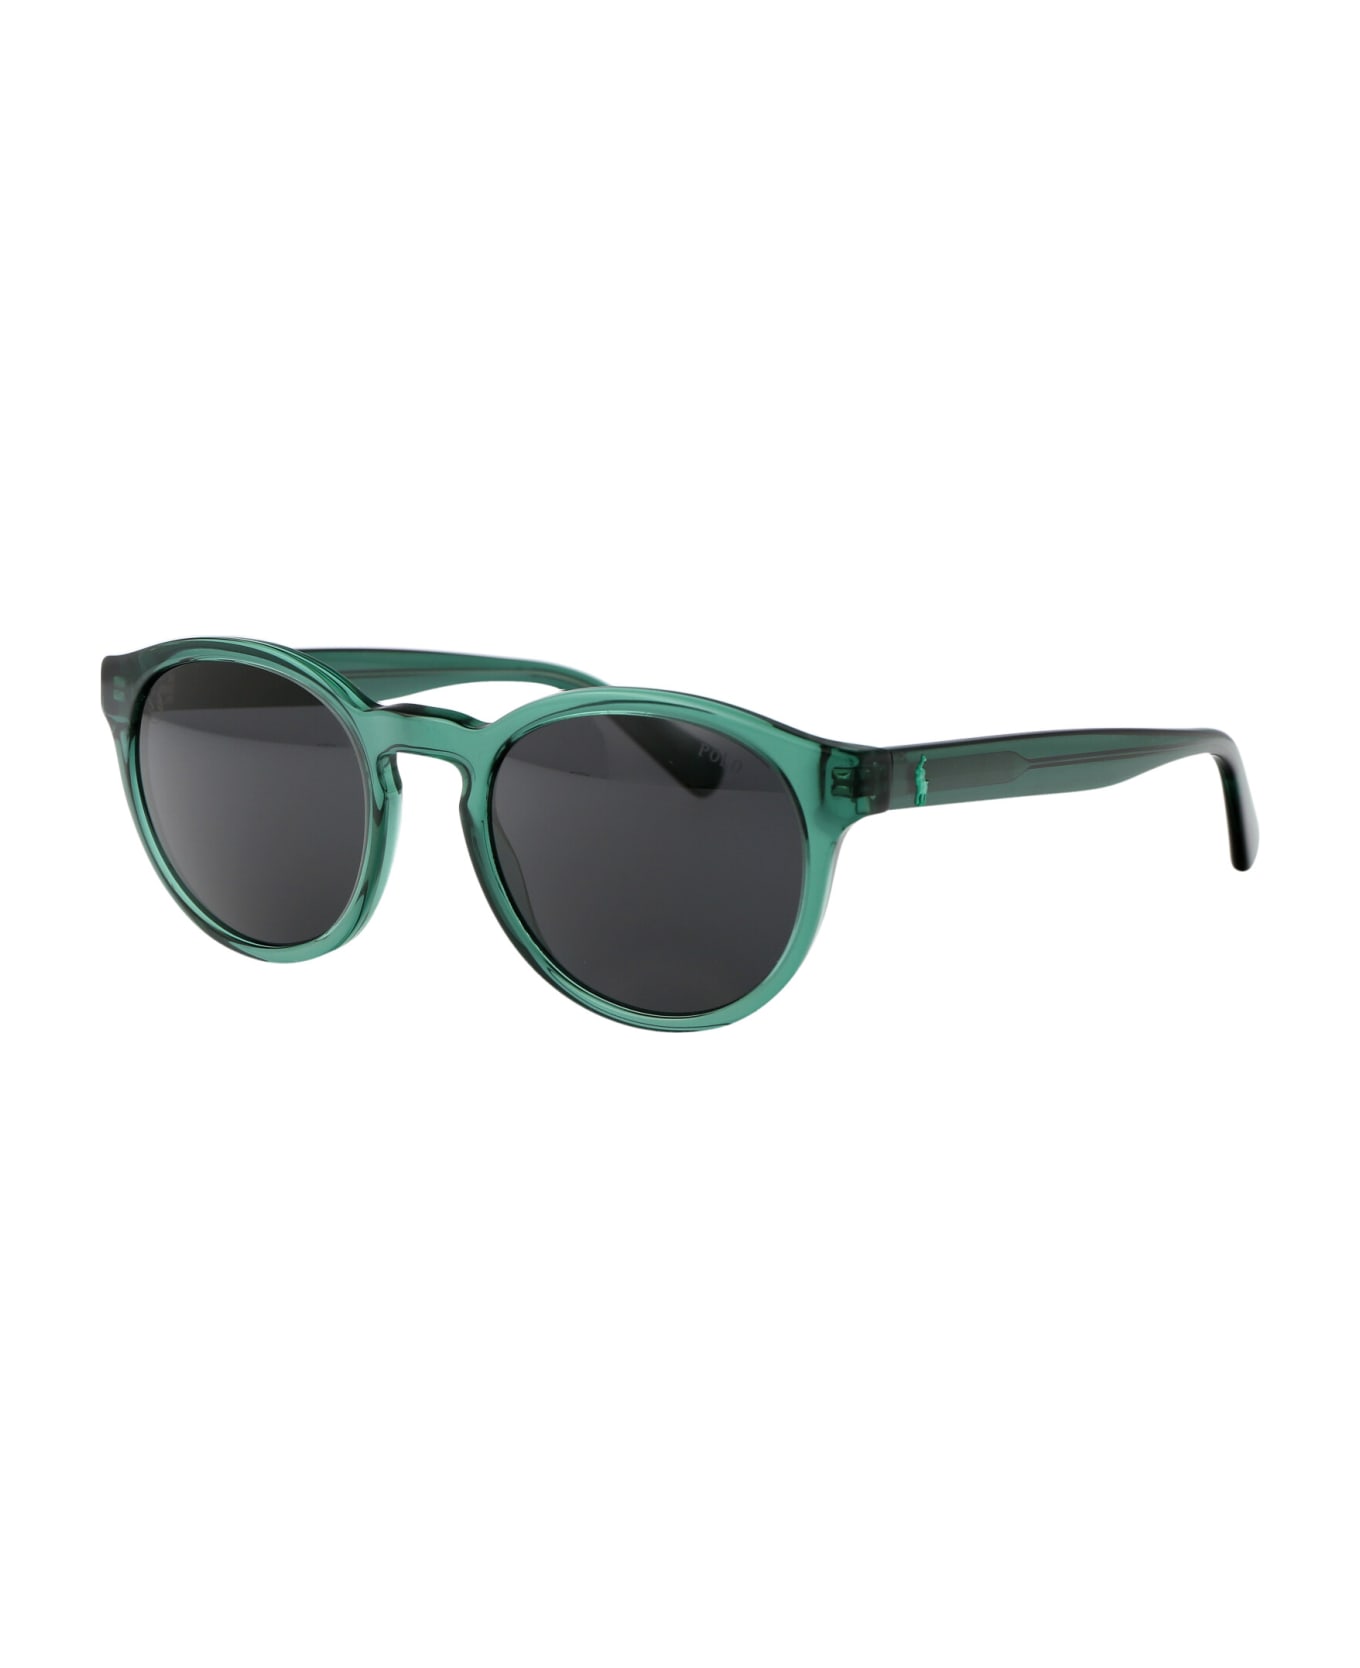 Polo Ralph Lauren 0ph4192 Sunglasses - 608487 Shiny Transparent Green